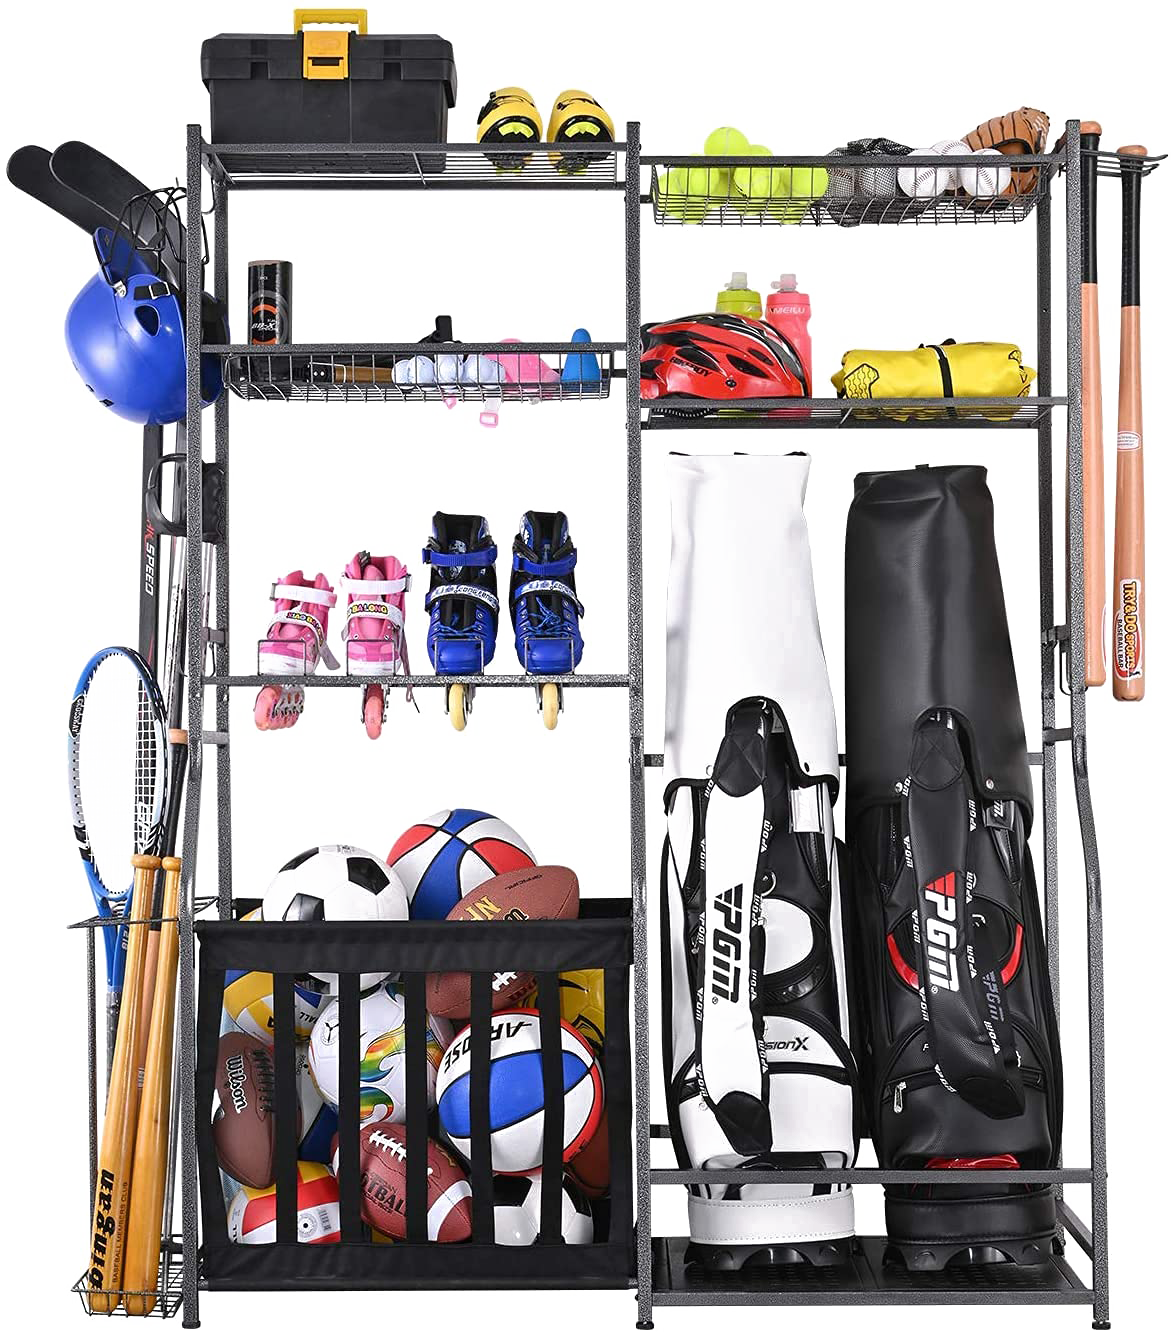 Mythinglogic Golf Storage Garage Organizer,Golf Bag Storage Stand and